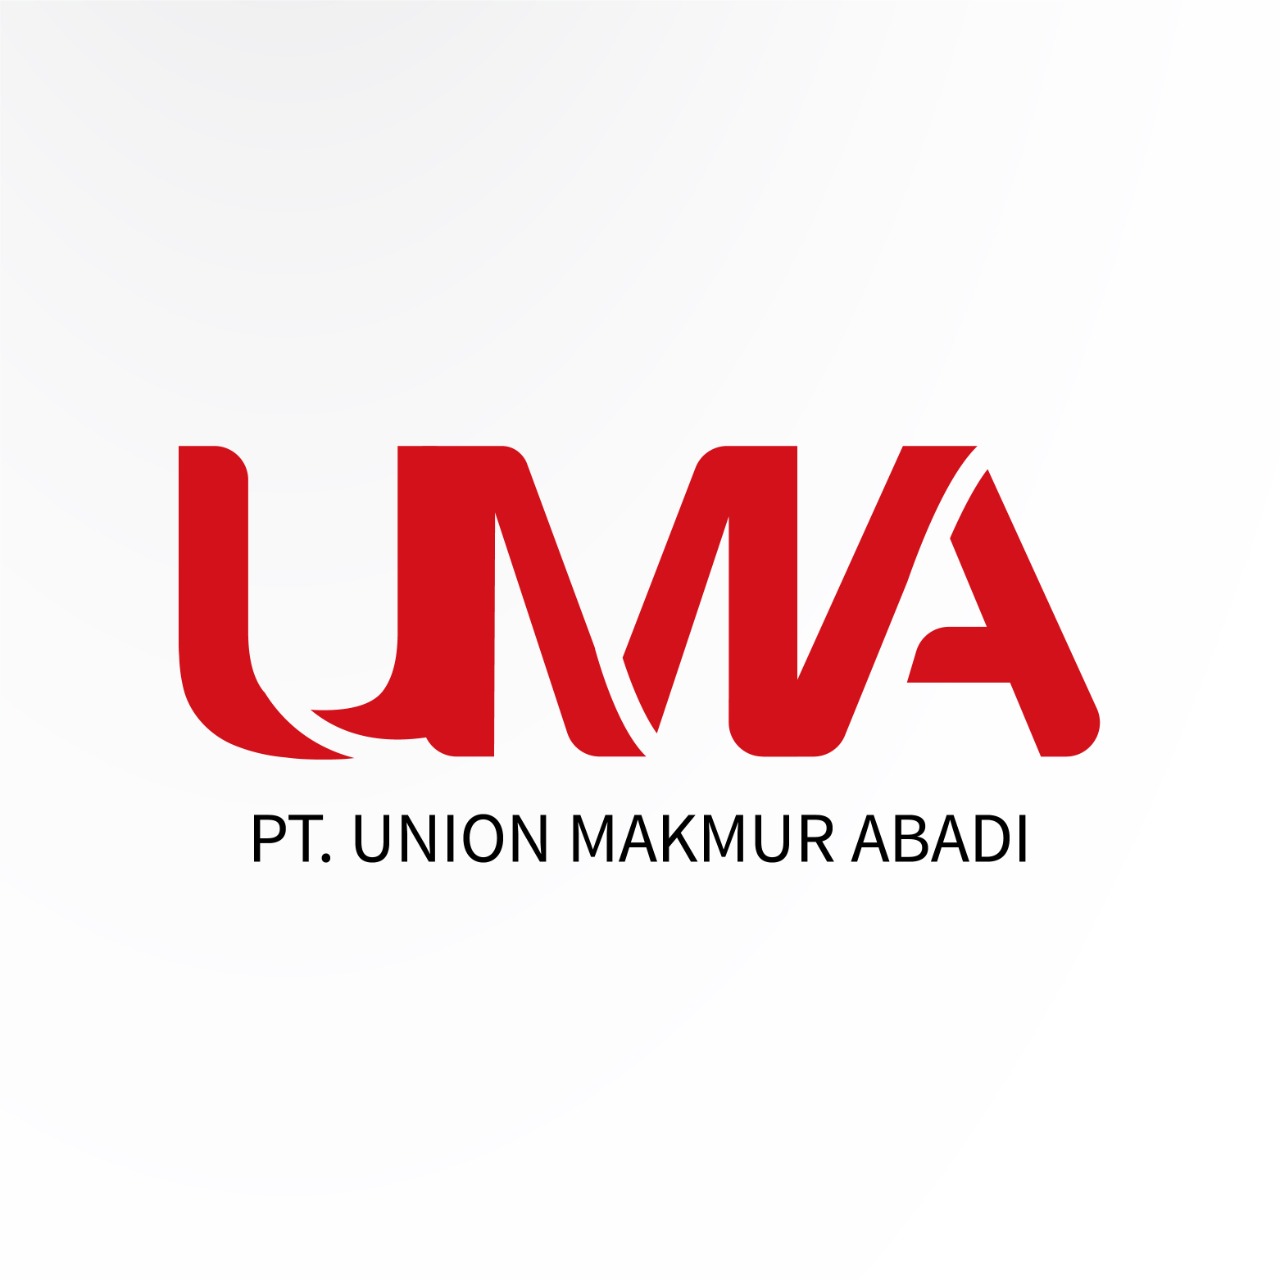 Union Makmur Abadi PT.